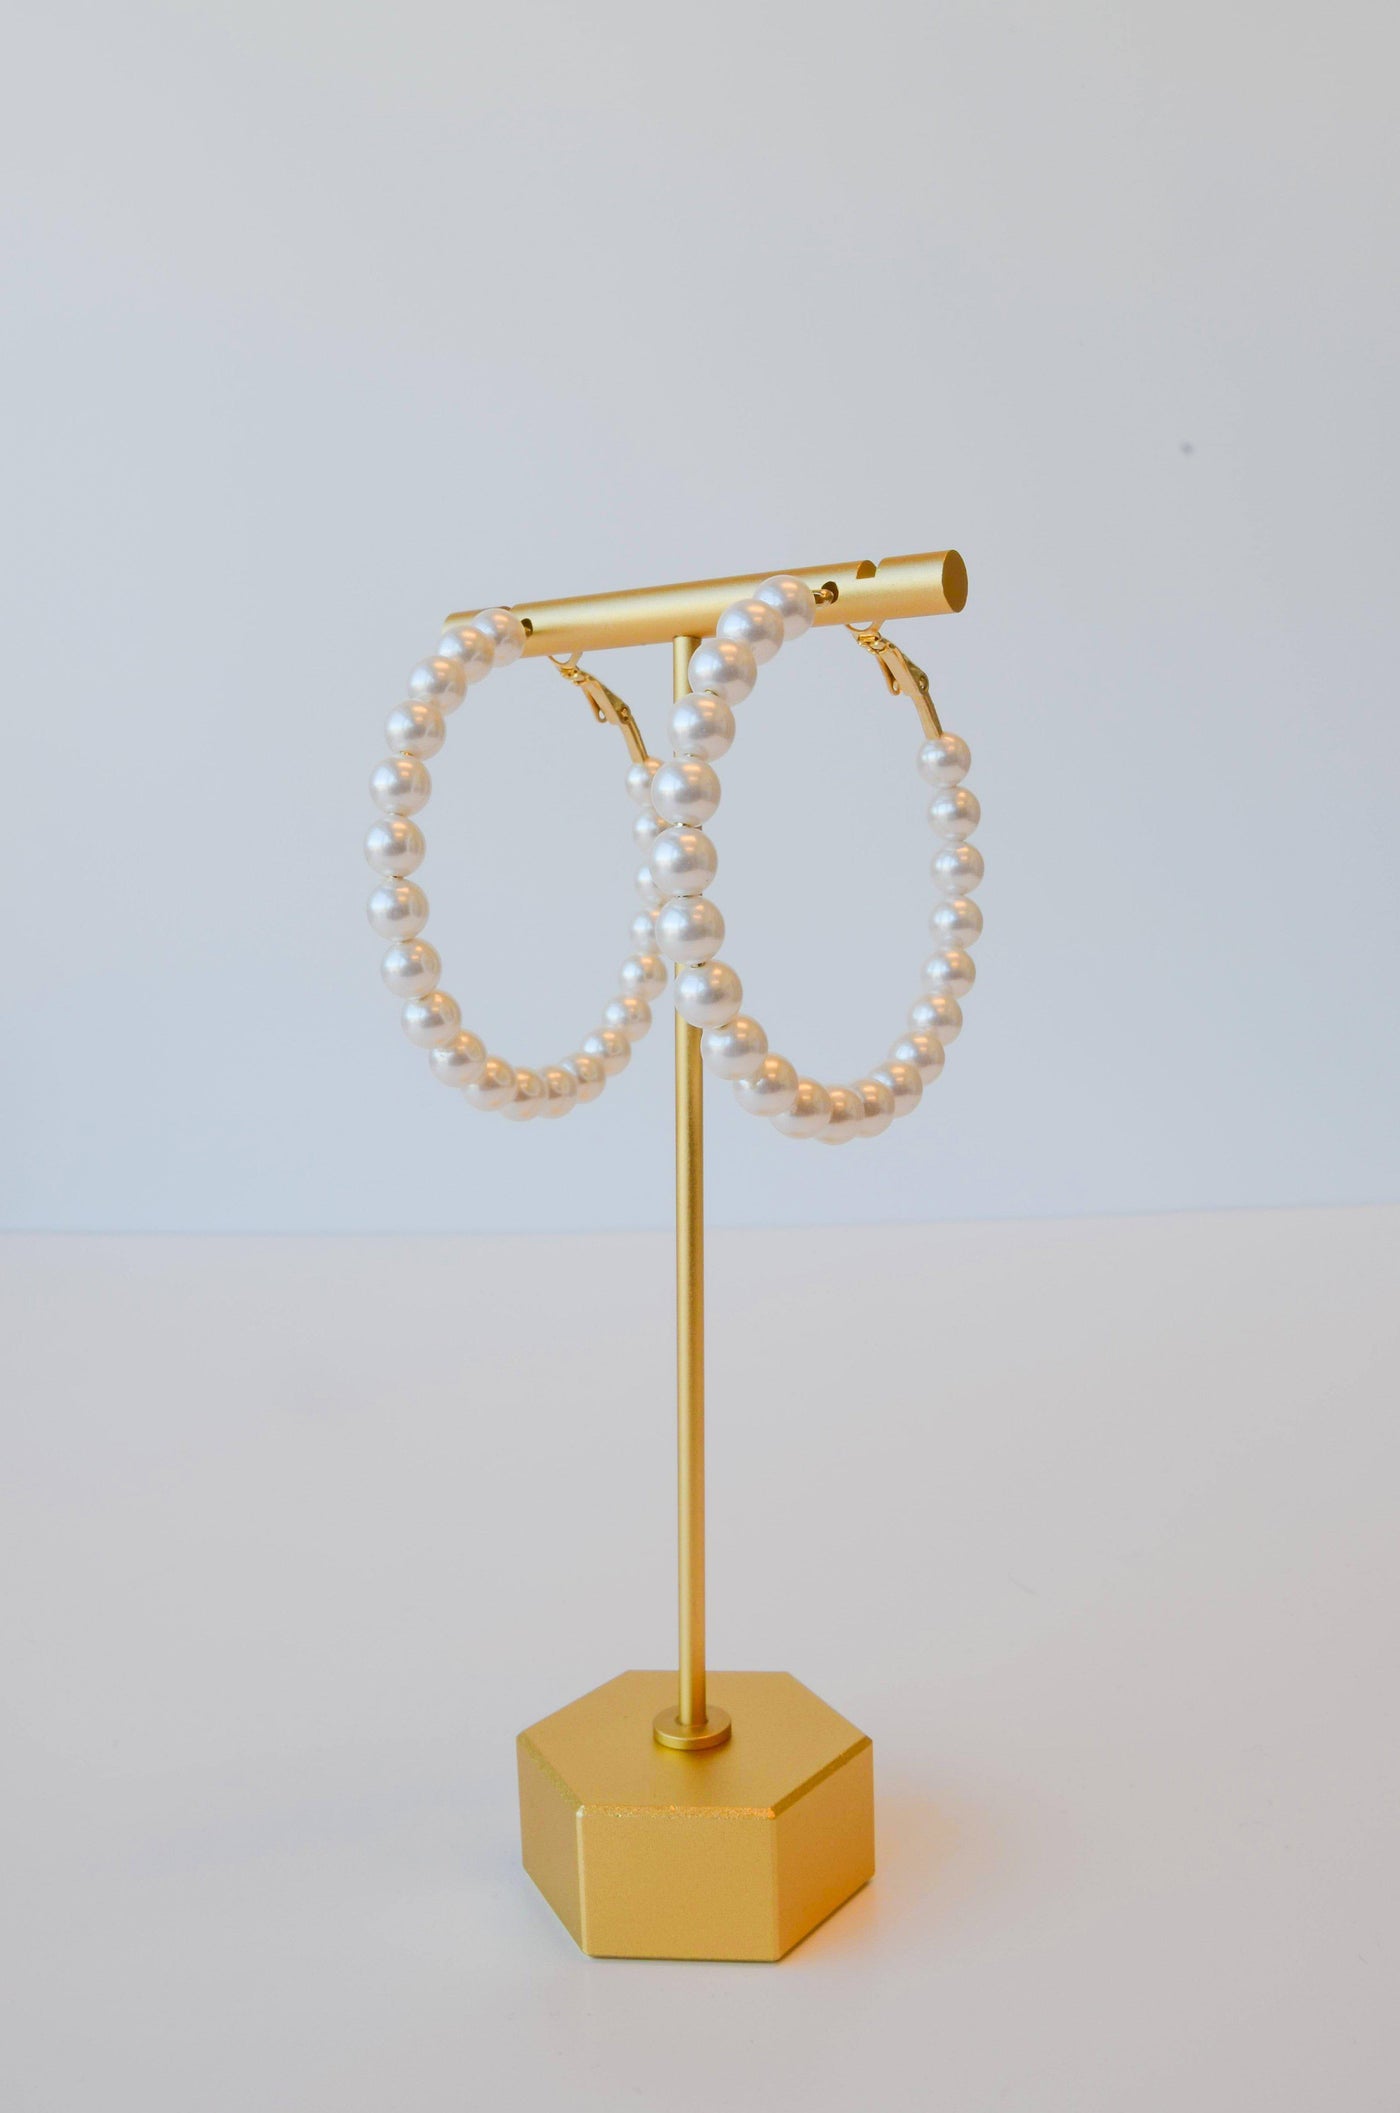 Pearls lining a medium sized hoop earring from salt lake city bridal shop